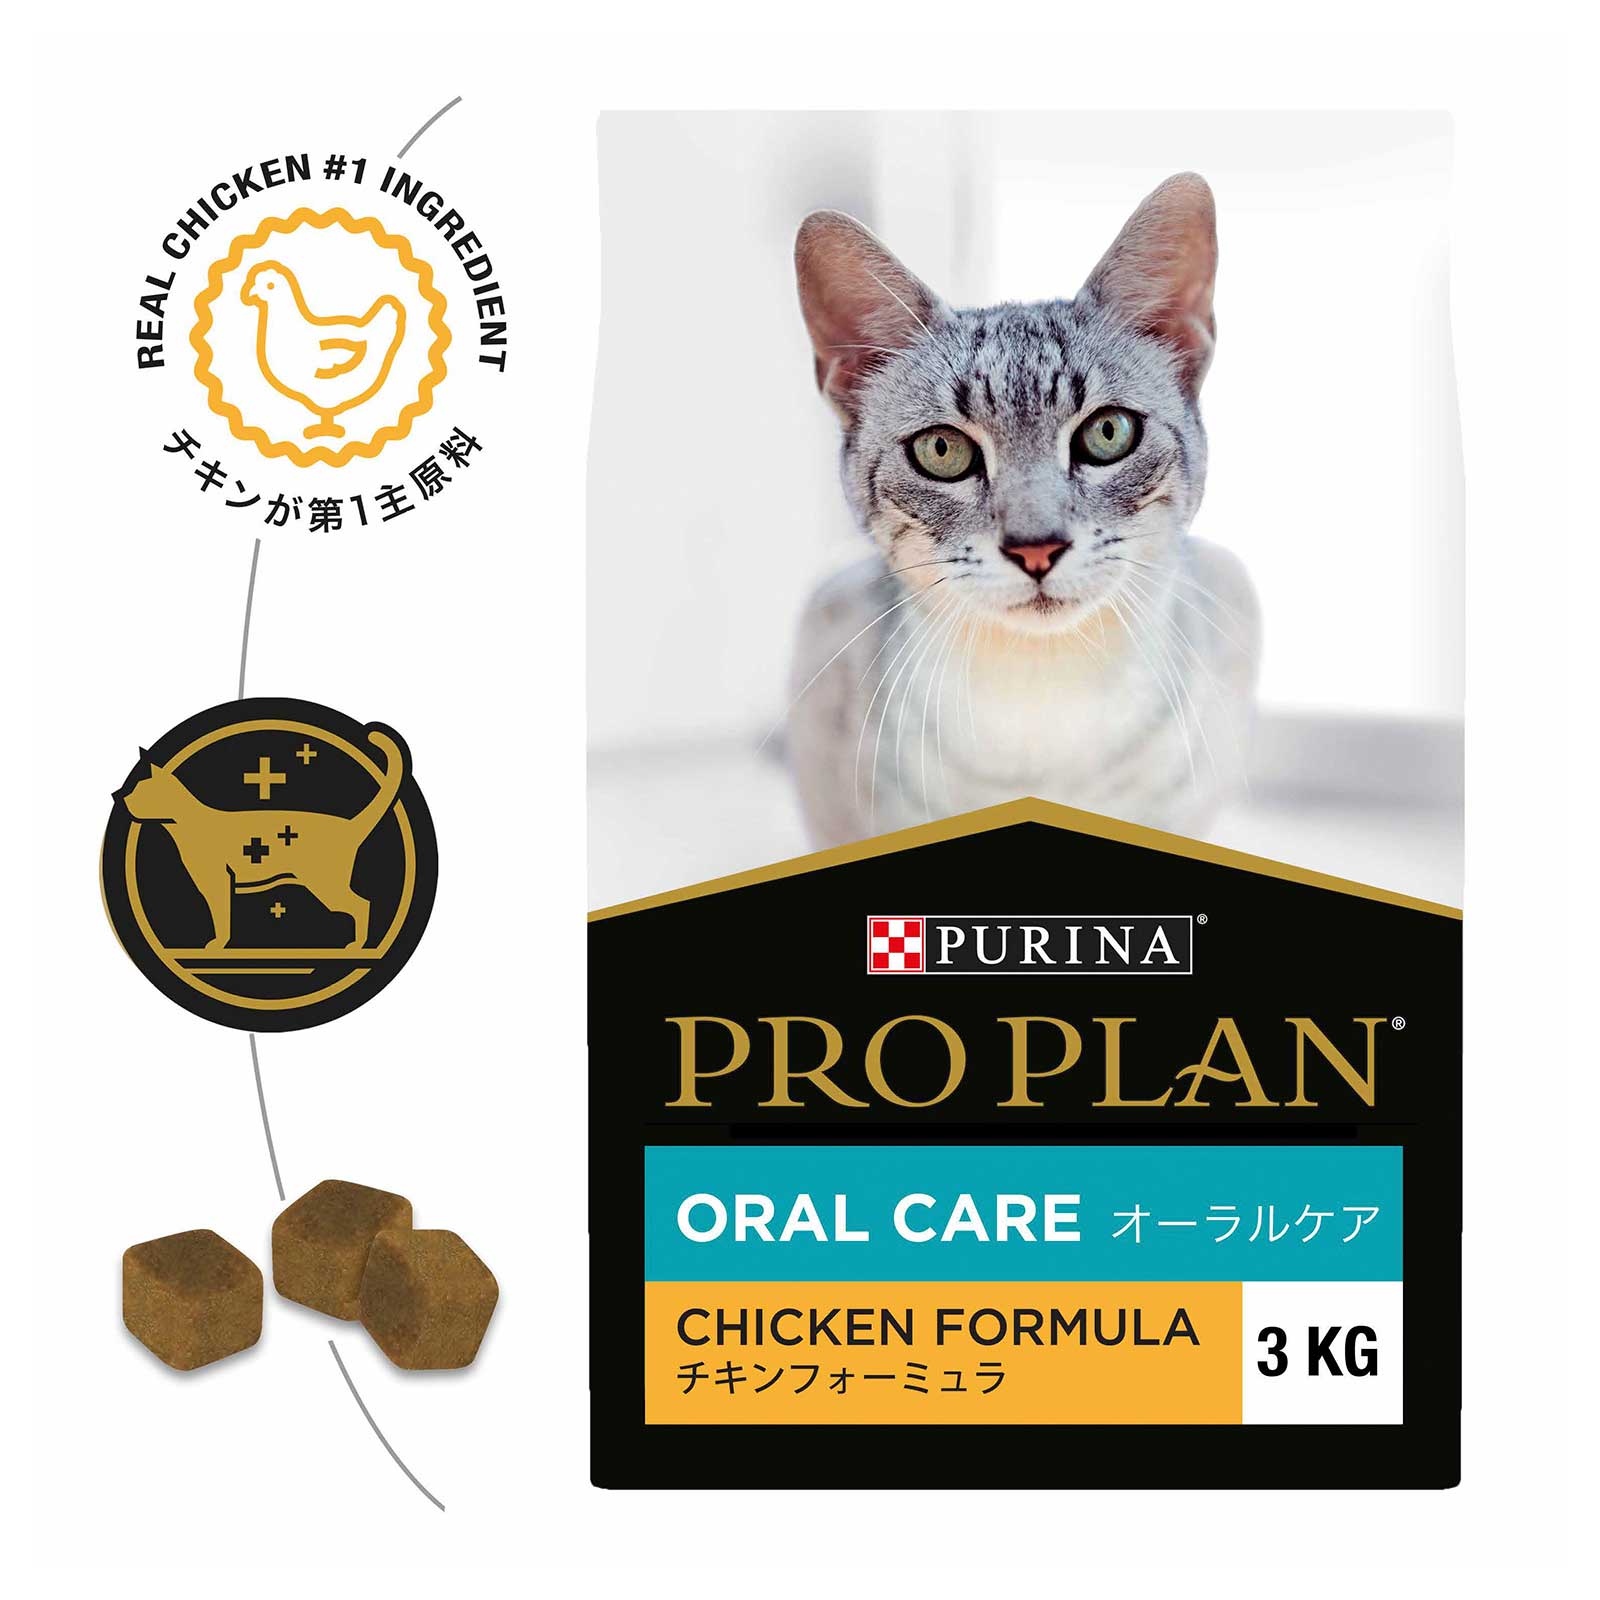 Pro Plan Cat Food Adult Oral Care